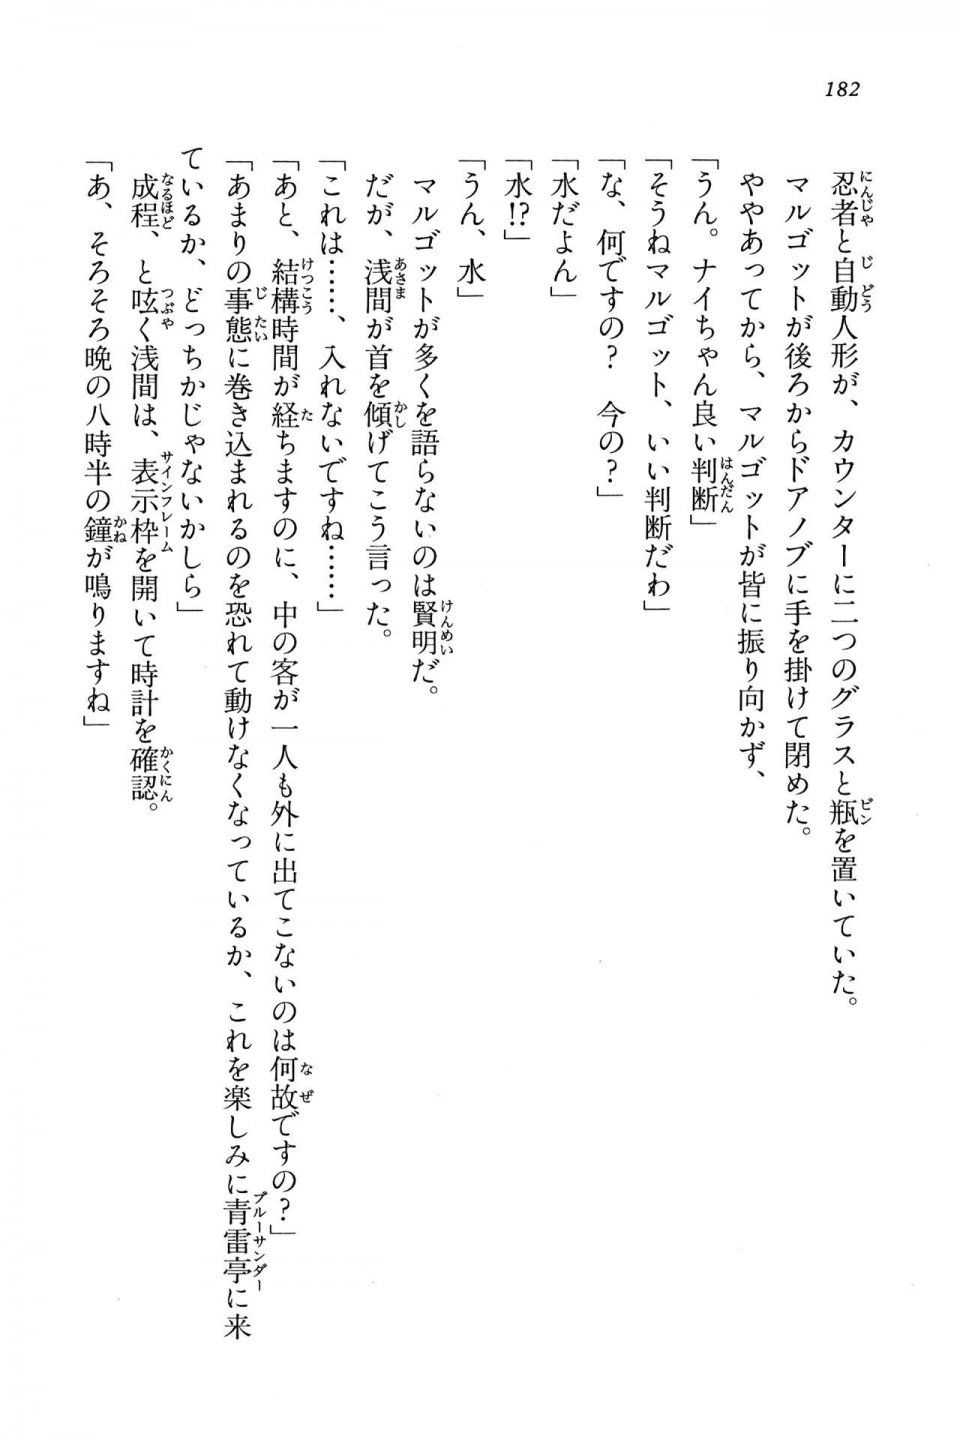 Kyoukai Senjou no Horizon BD Special Mininovel Vol 7(4A) - Photo #186